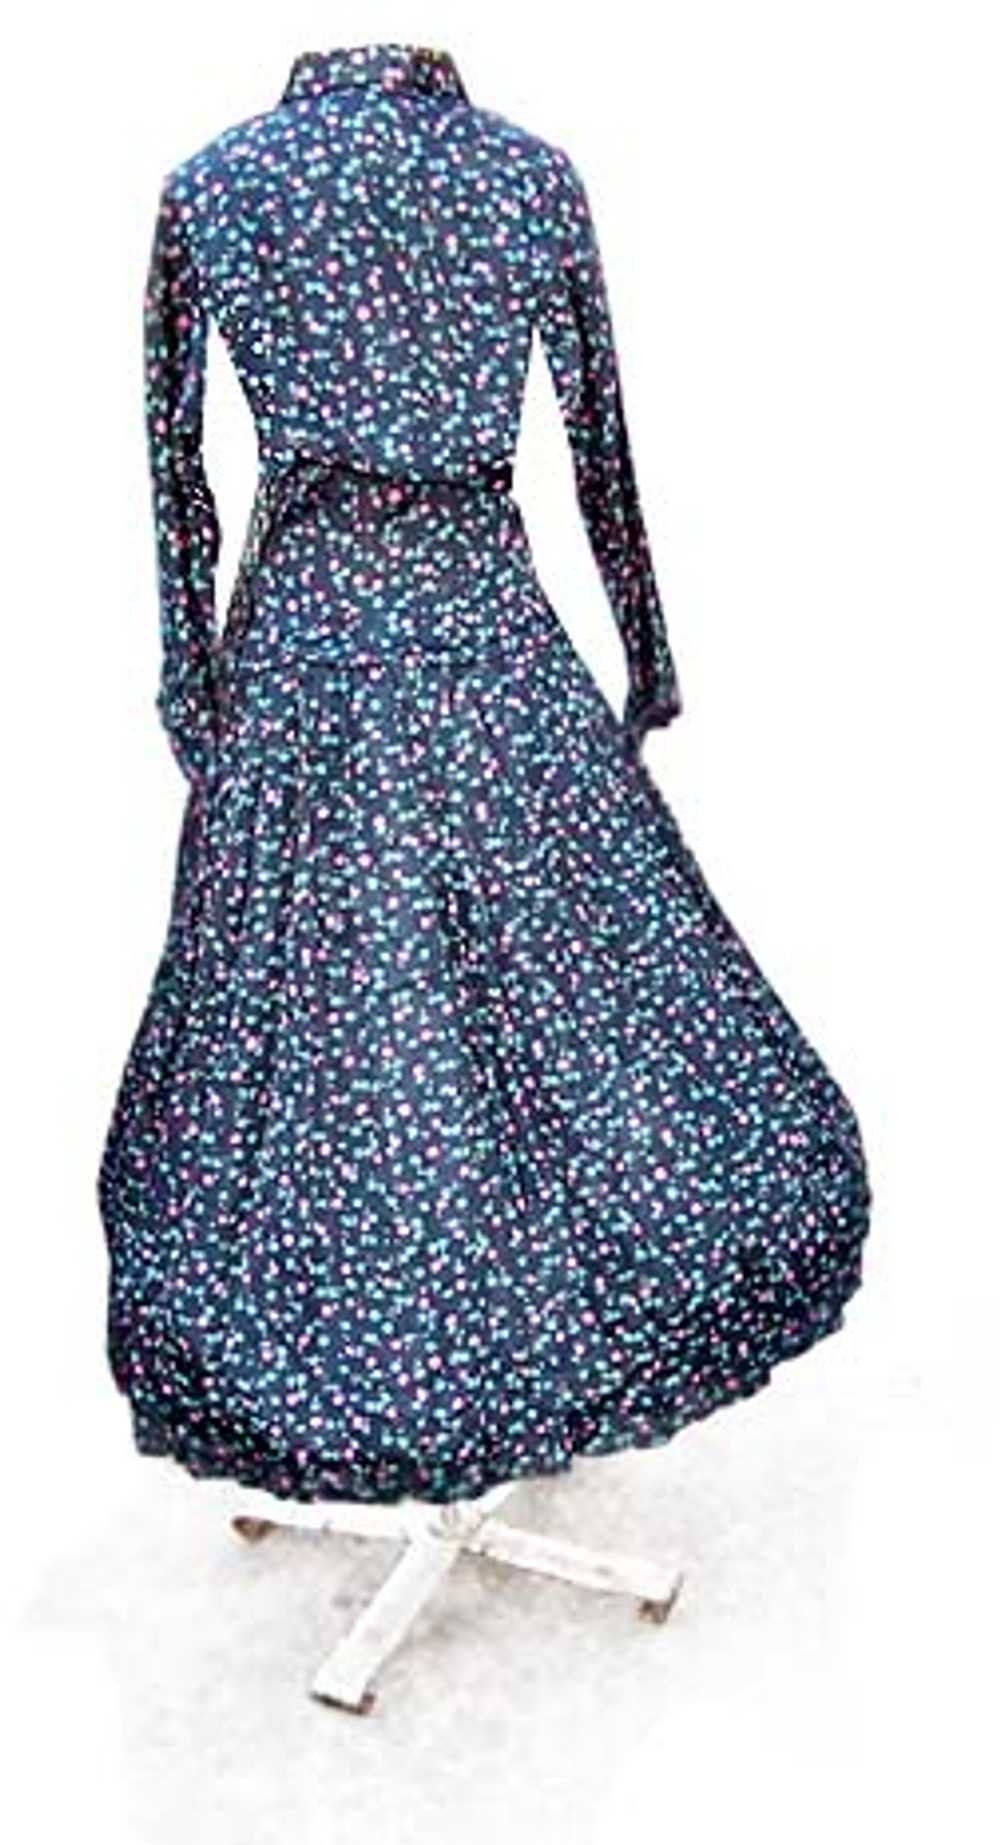 Drop-waist floral dress - image 4